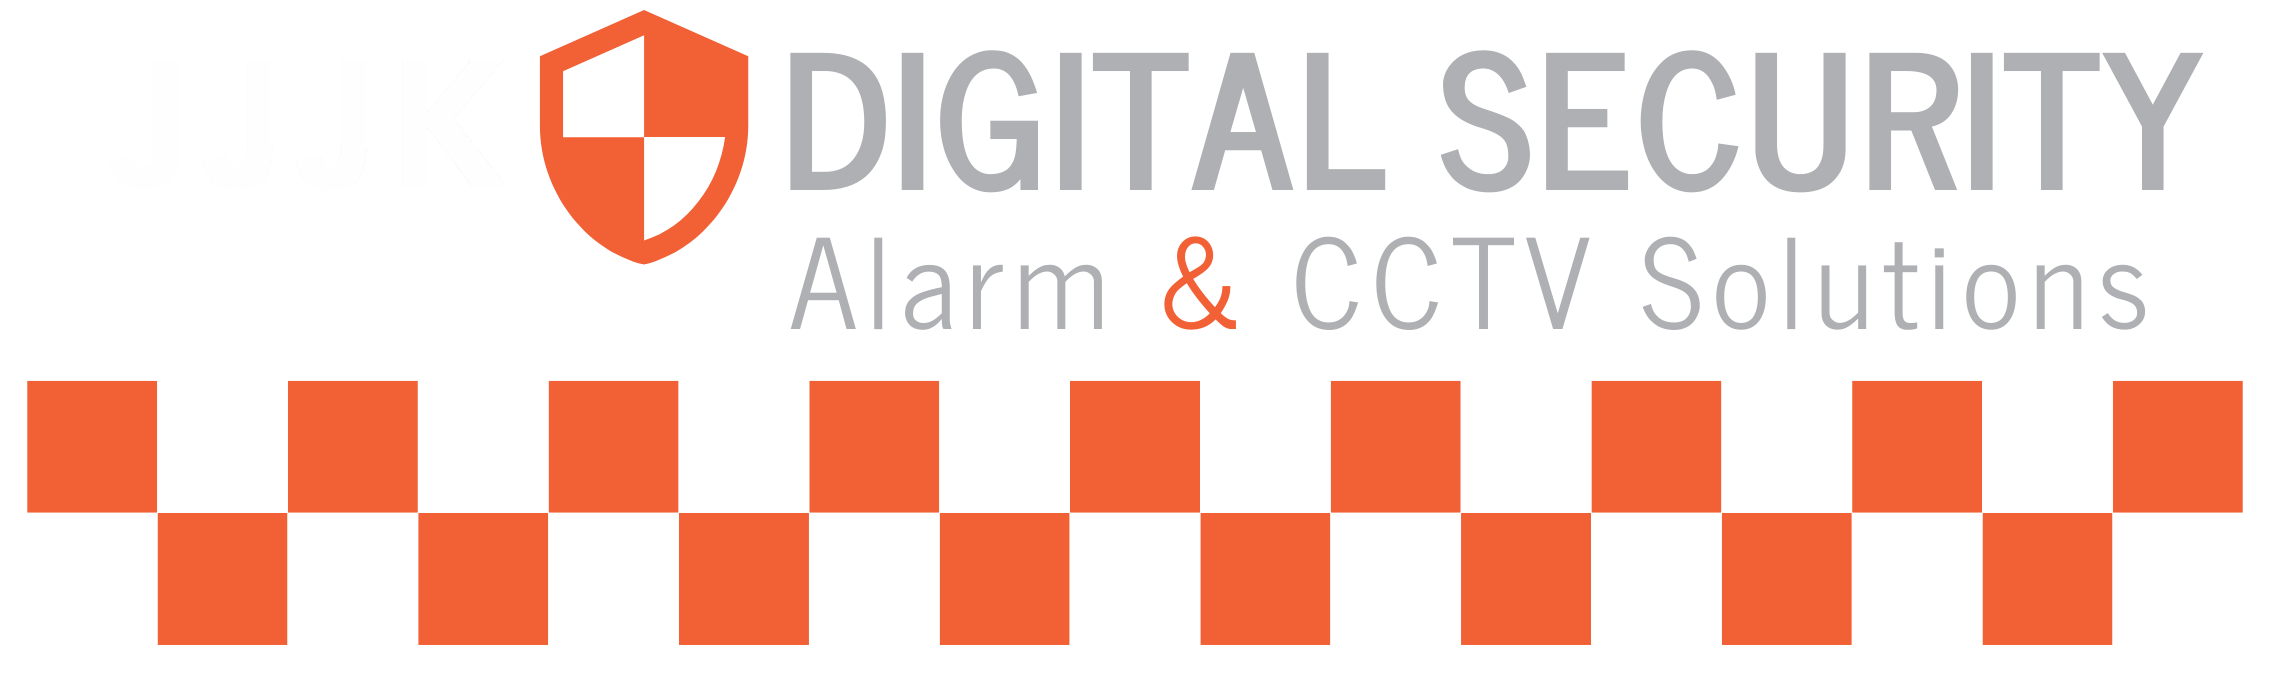 JJJK Digital Security - Alarm & CCTV Solutions